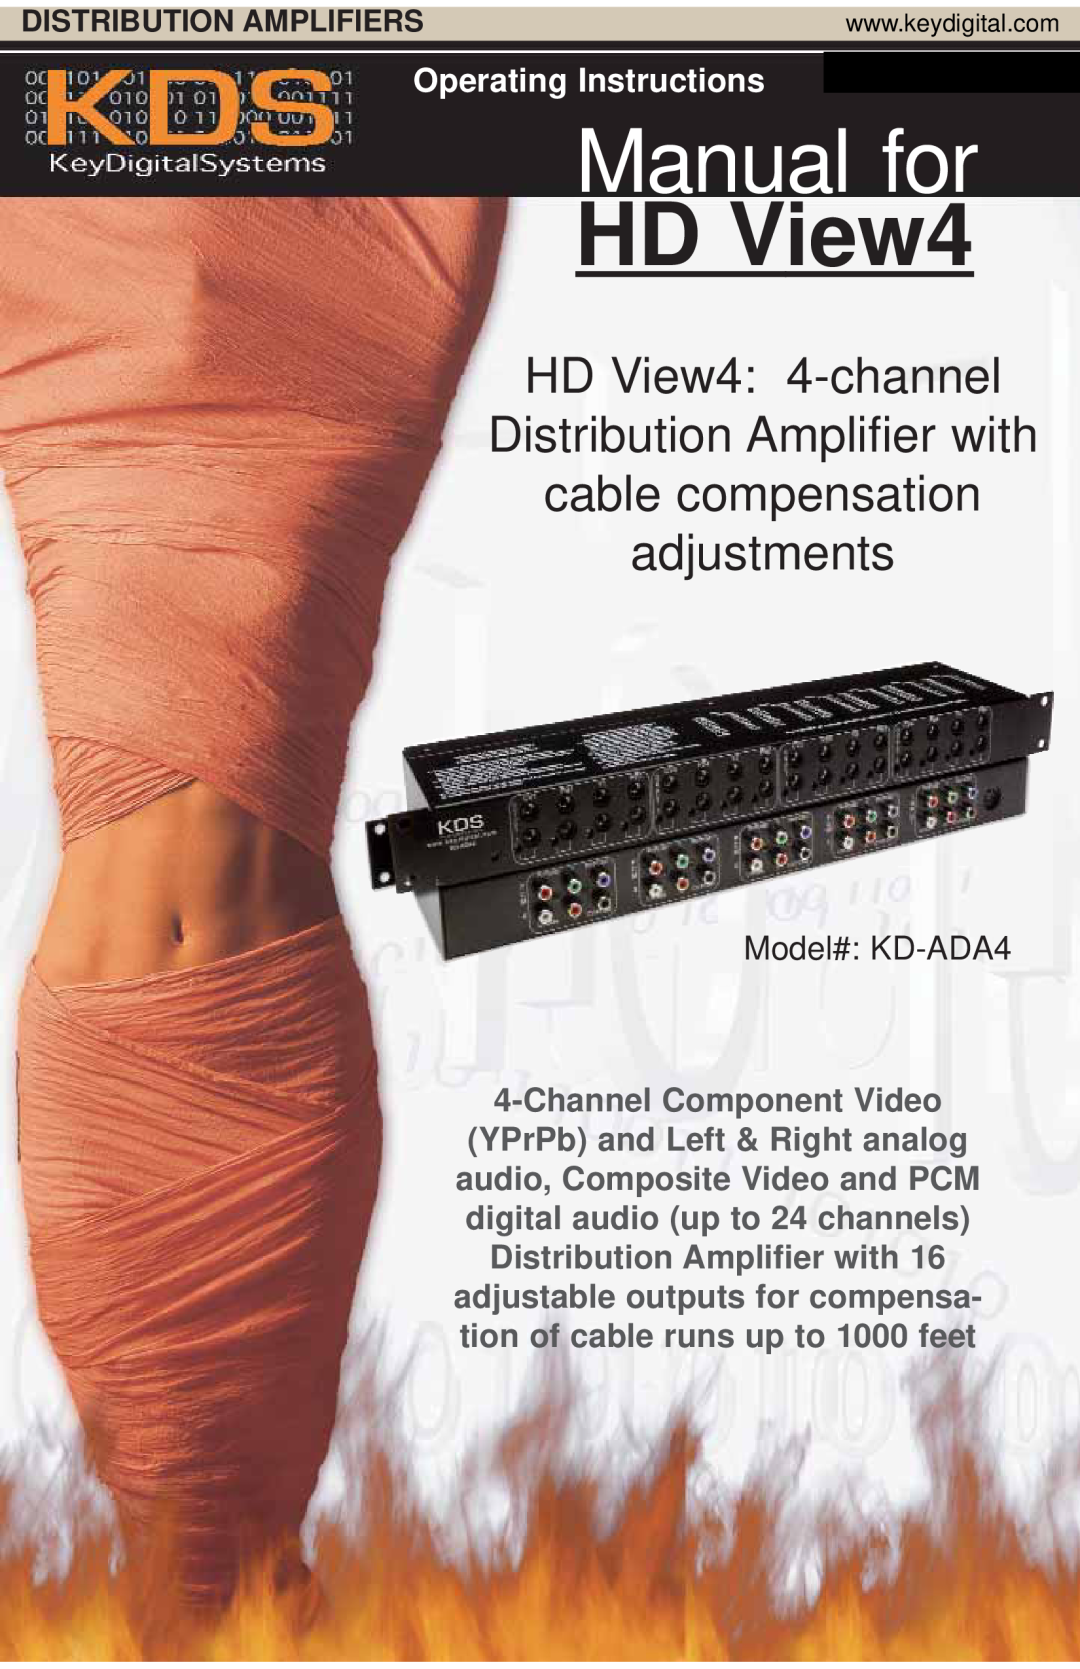 Key Digital manual Operating Instructions, Distribution Amplifiers, Manual for, HD View4, Model# KD-ADA4 